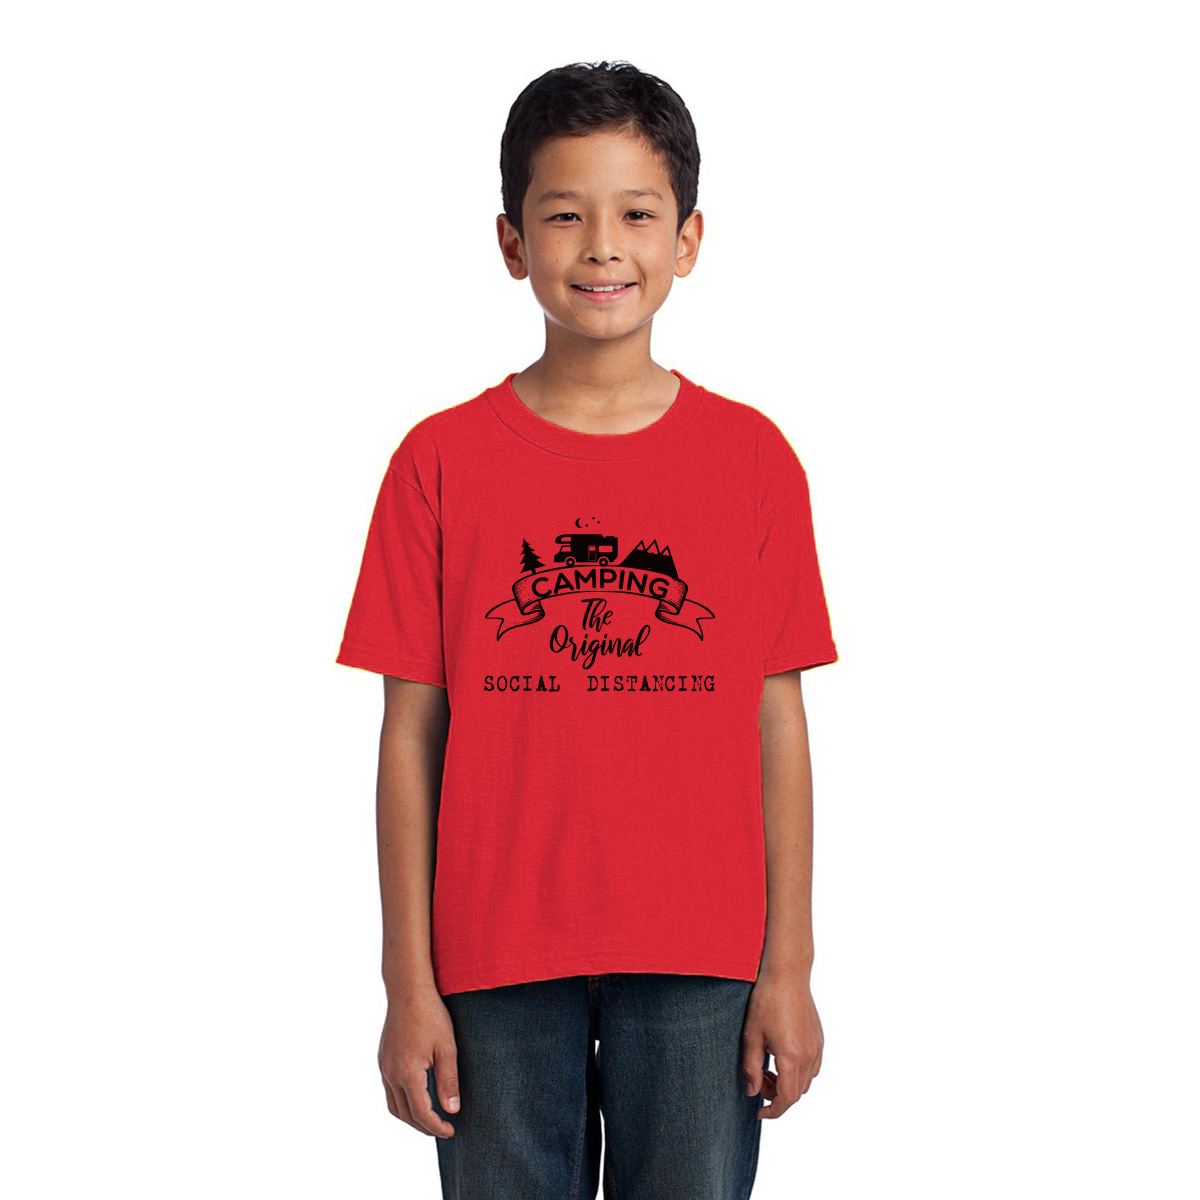 Camping Social Distancing Kids T-shirt | Red